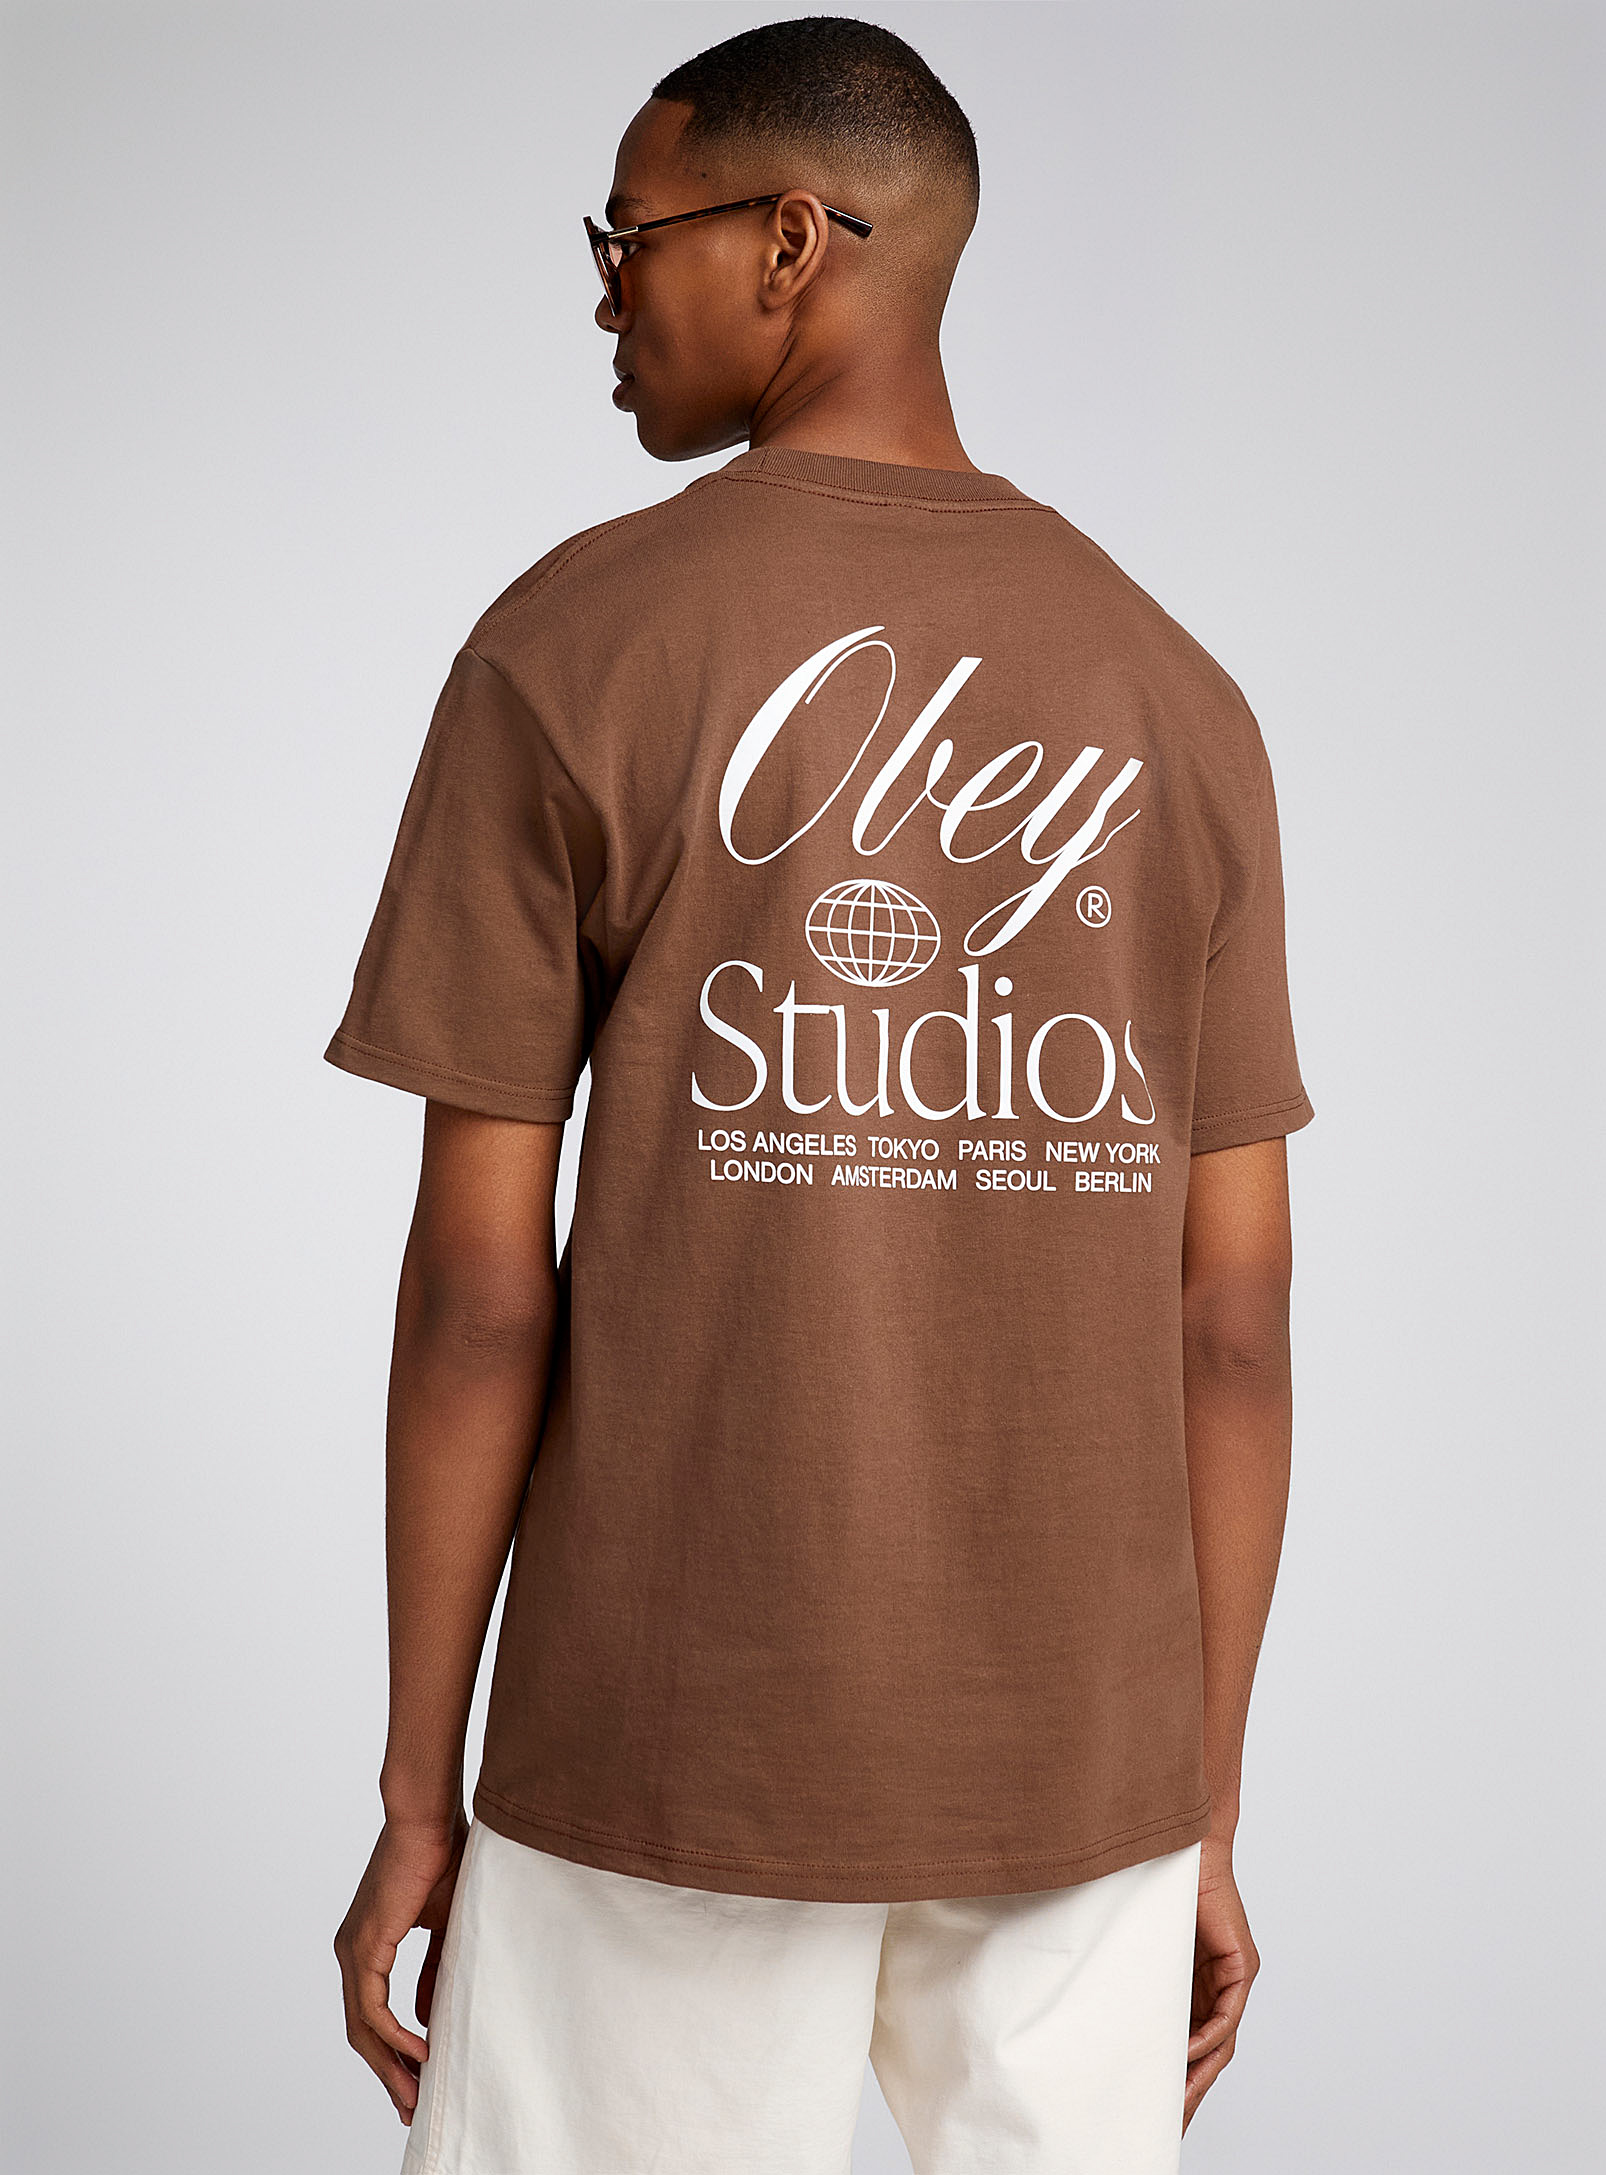 Obey Studios T-shirt In Copper